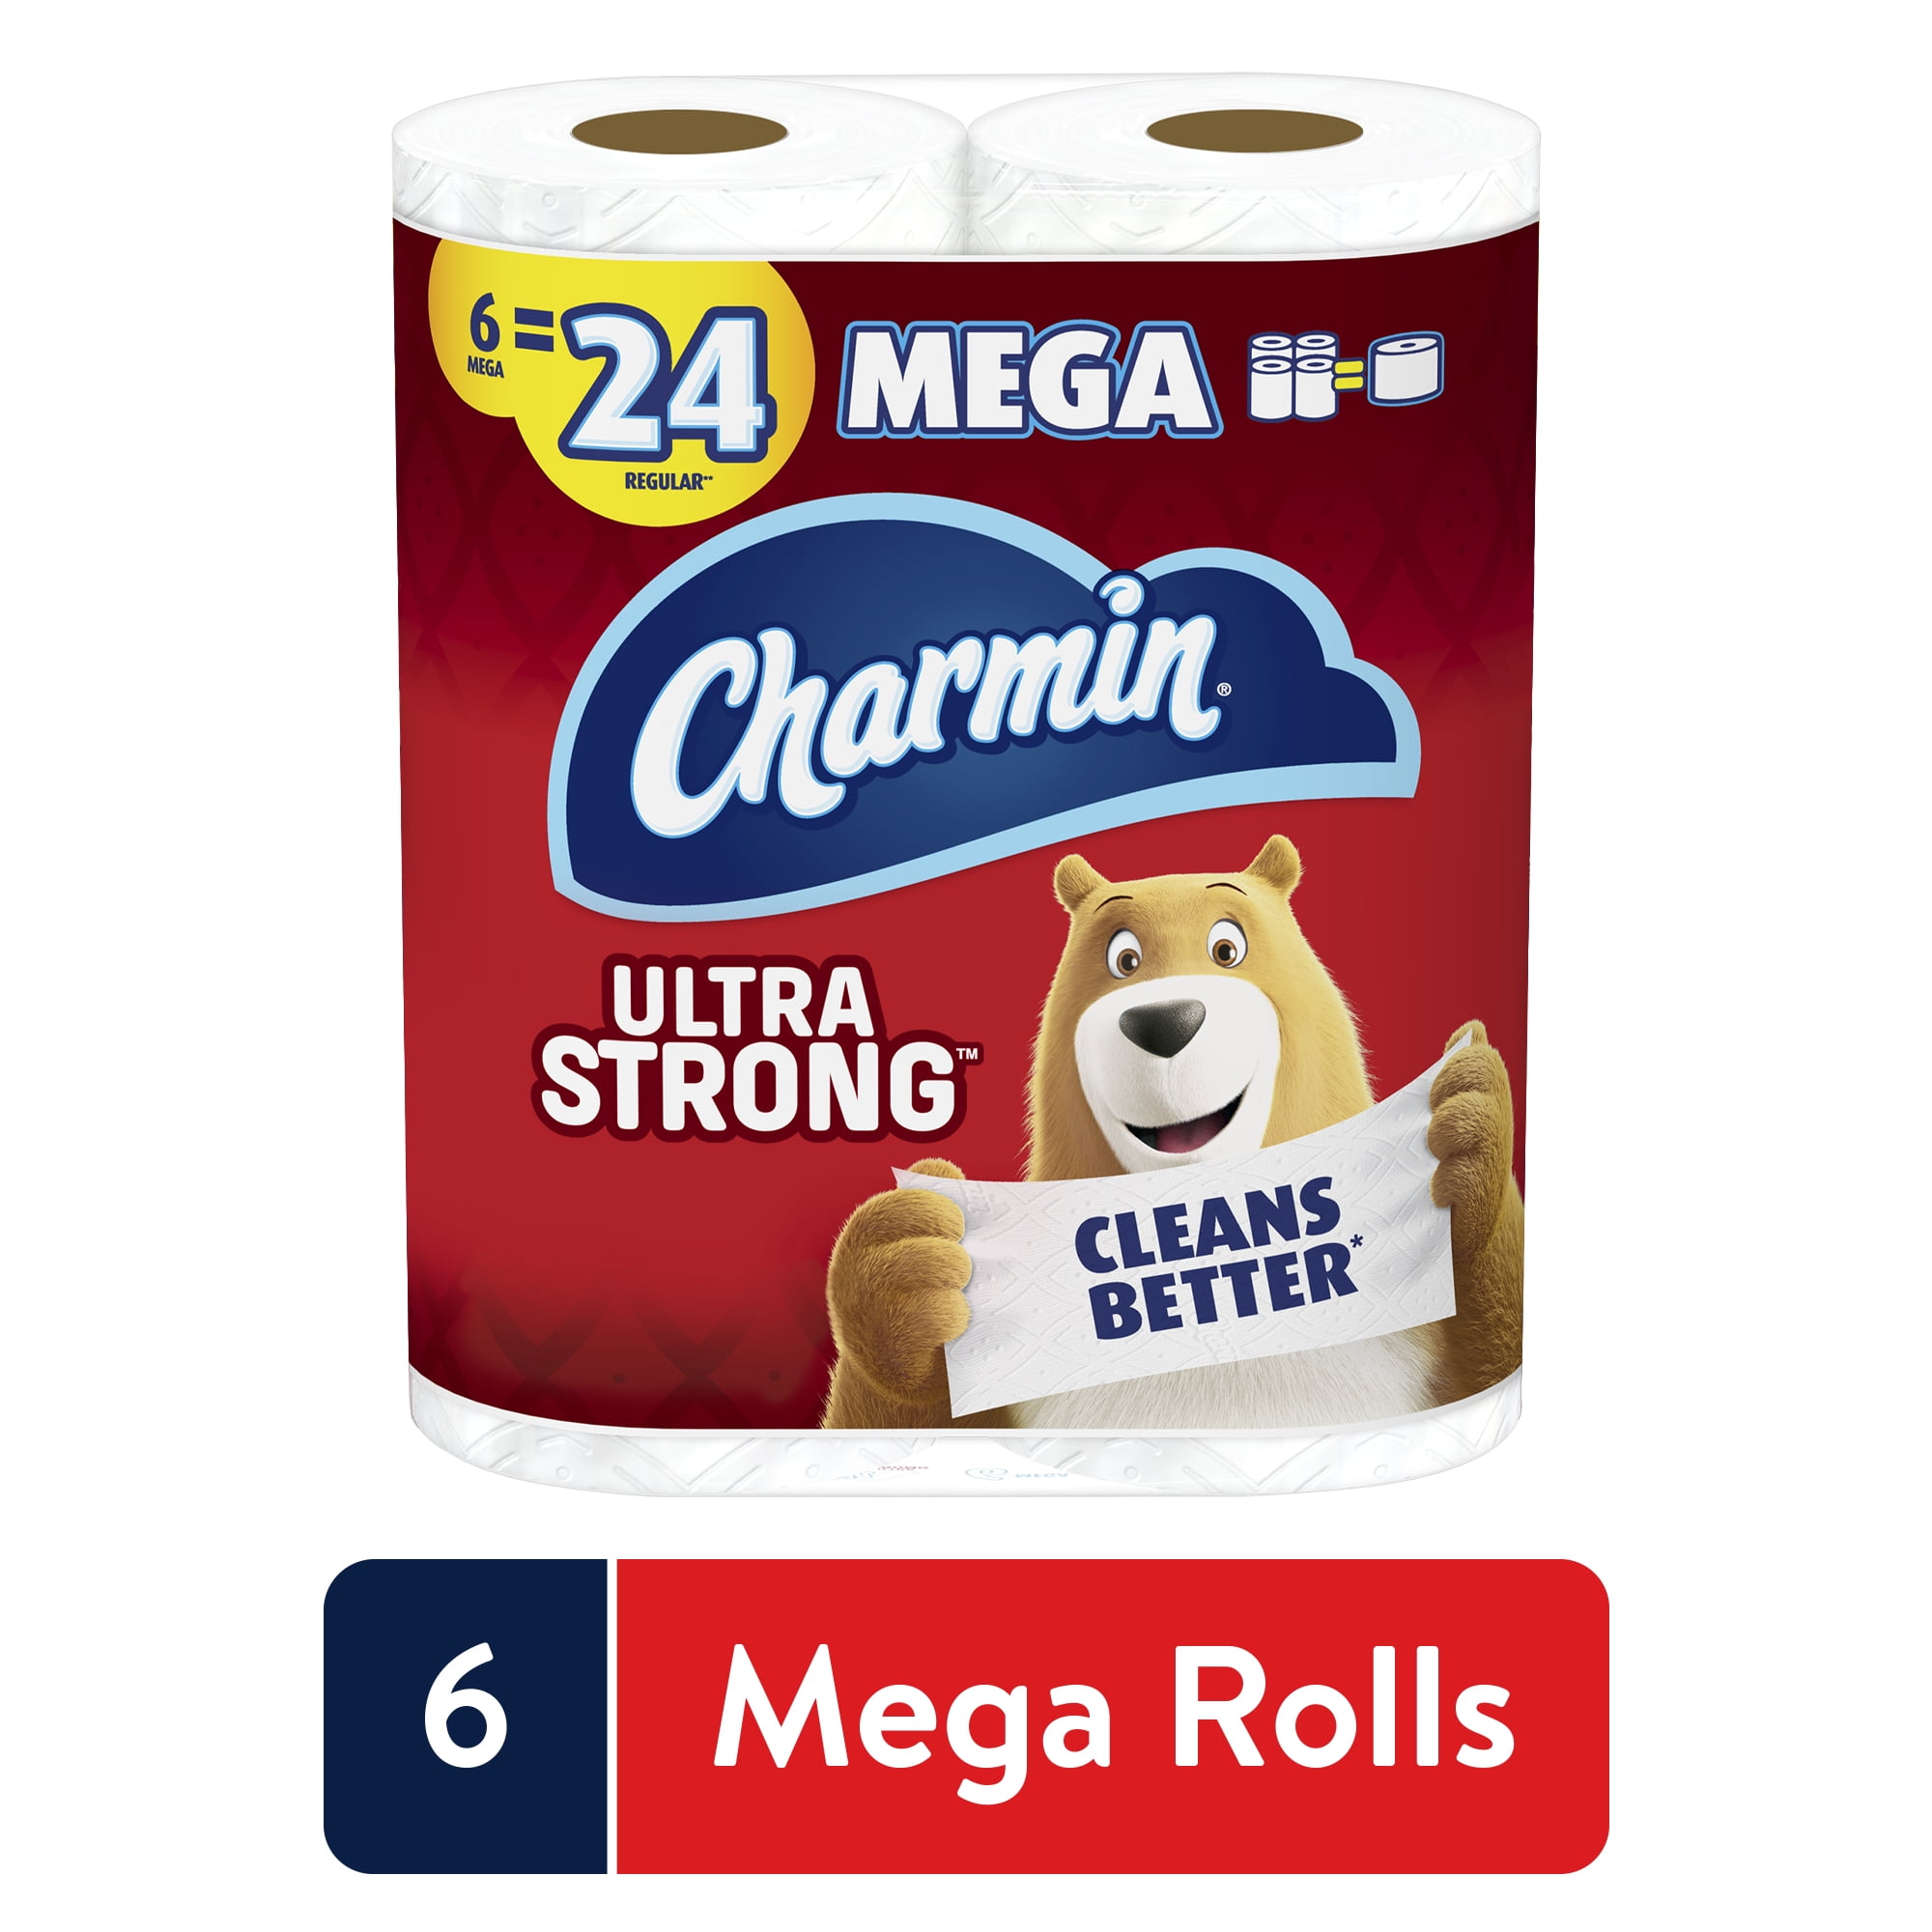 Details about   30 Mega = 120 REG ROLLS Charmin ULTRA STRONG Toilet Paper 264 Sheets 2Ply BULK 